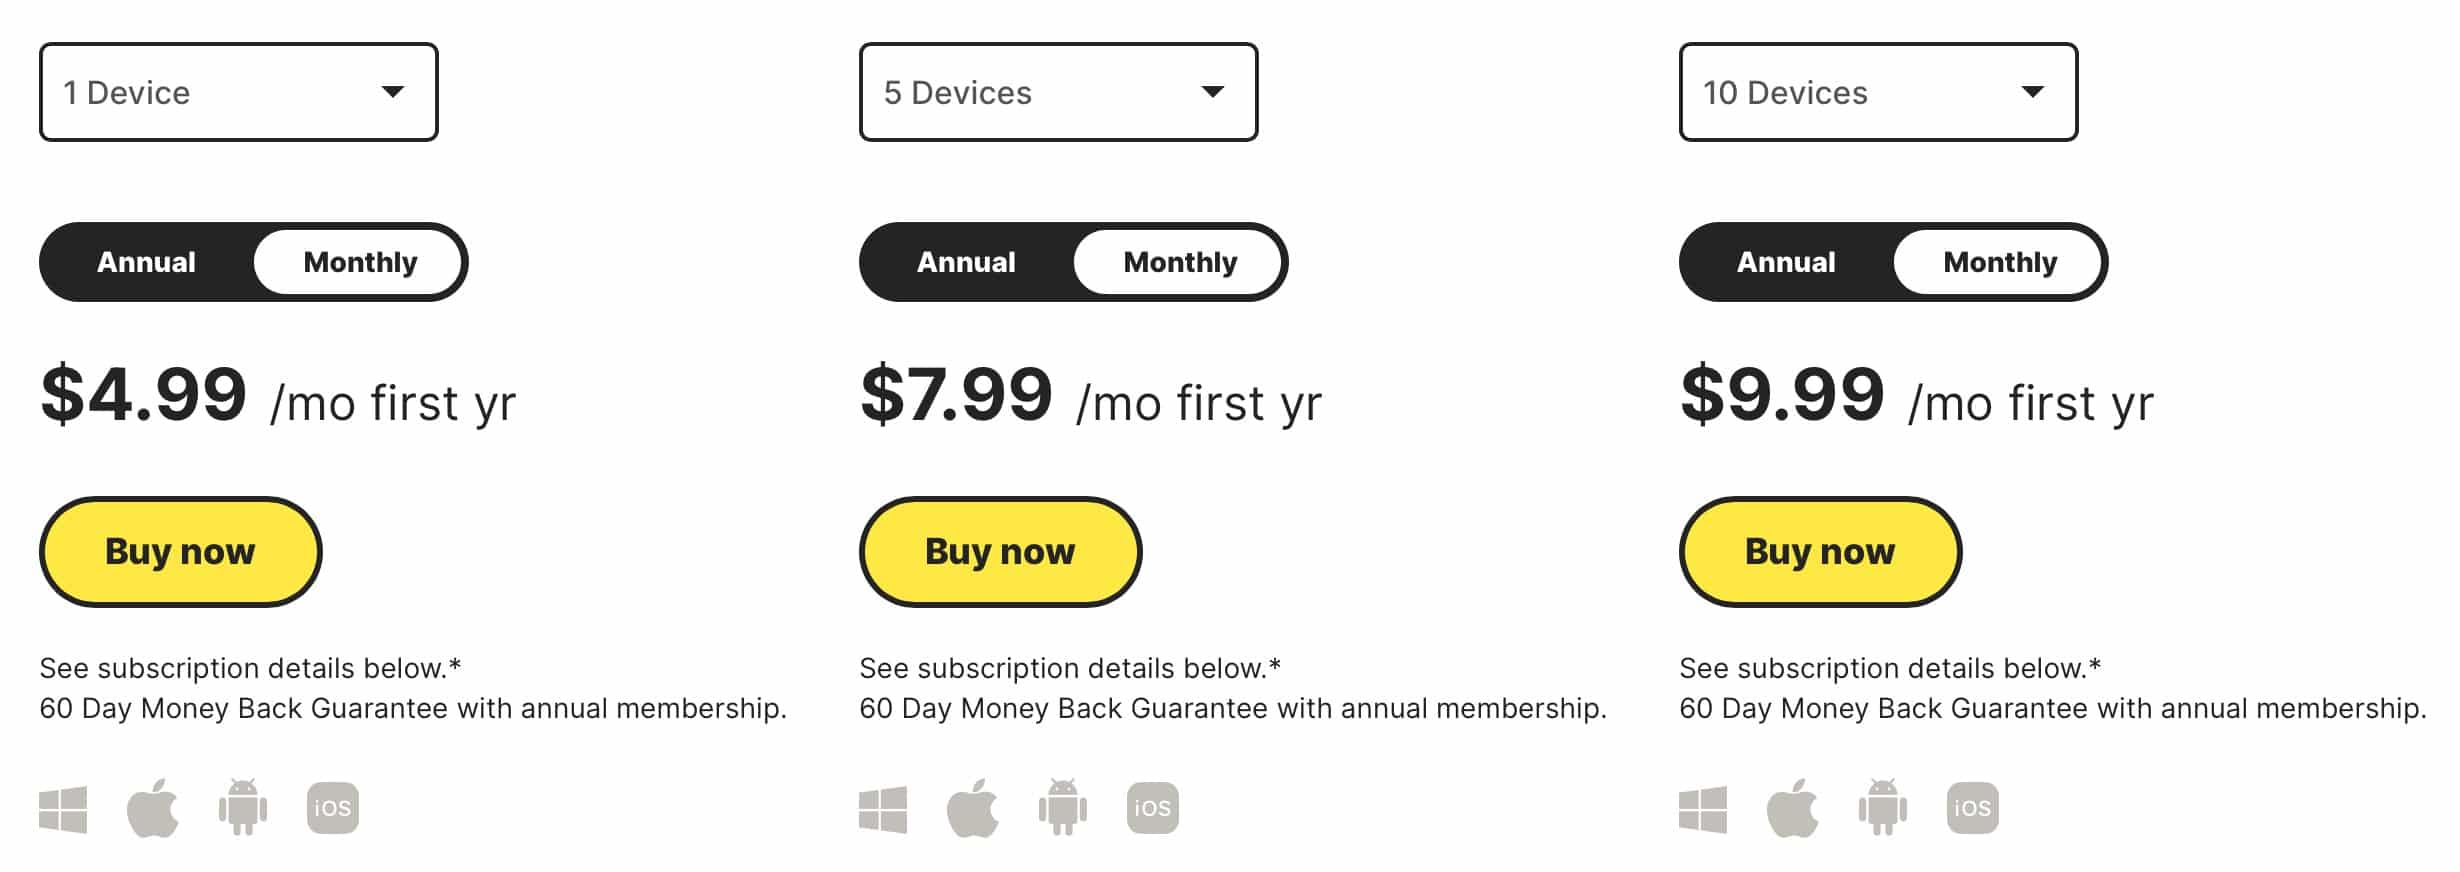 Norton VPN - Pricing - Monthly